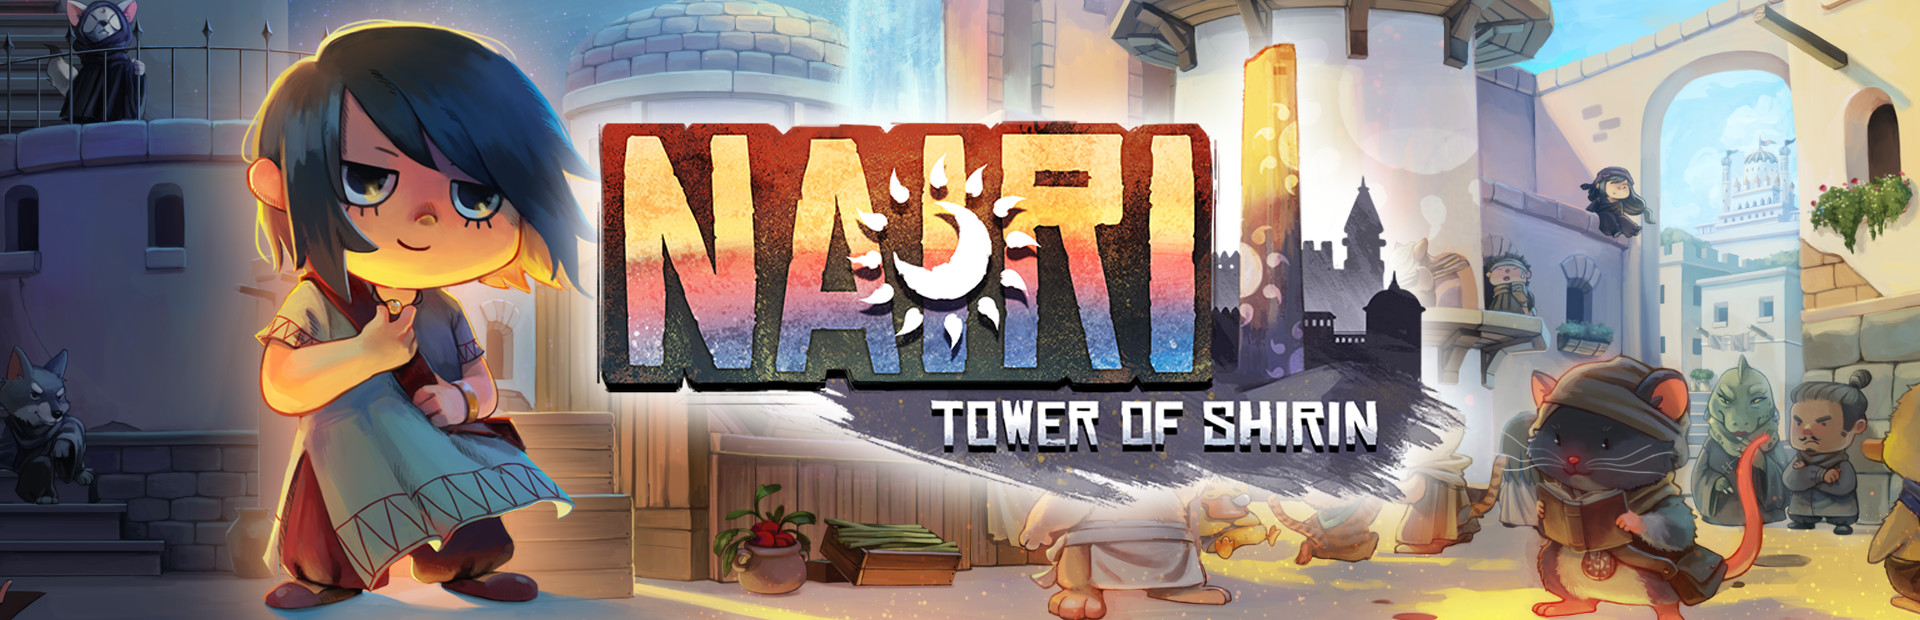 NAIRI: Tower of Shirin cover image